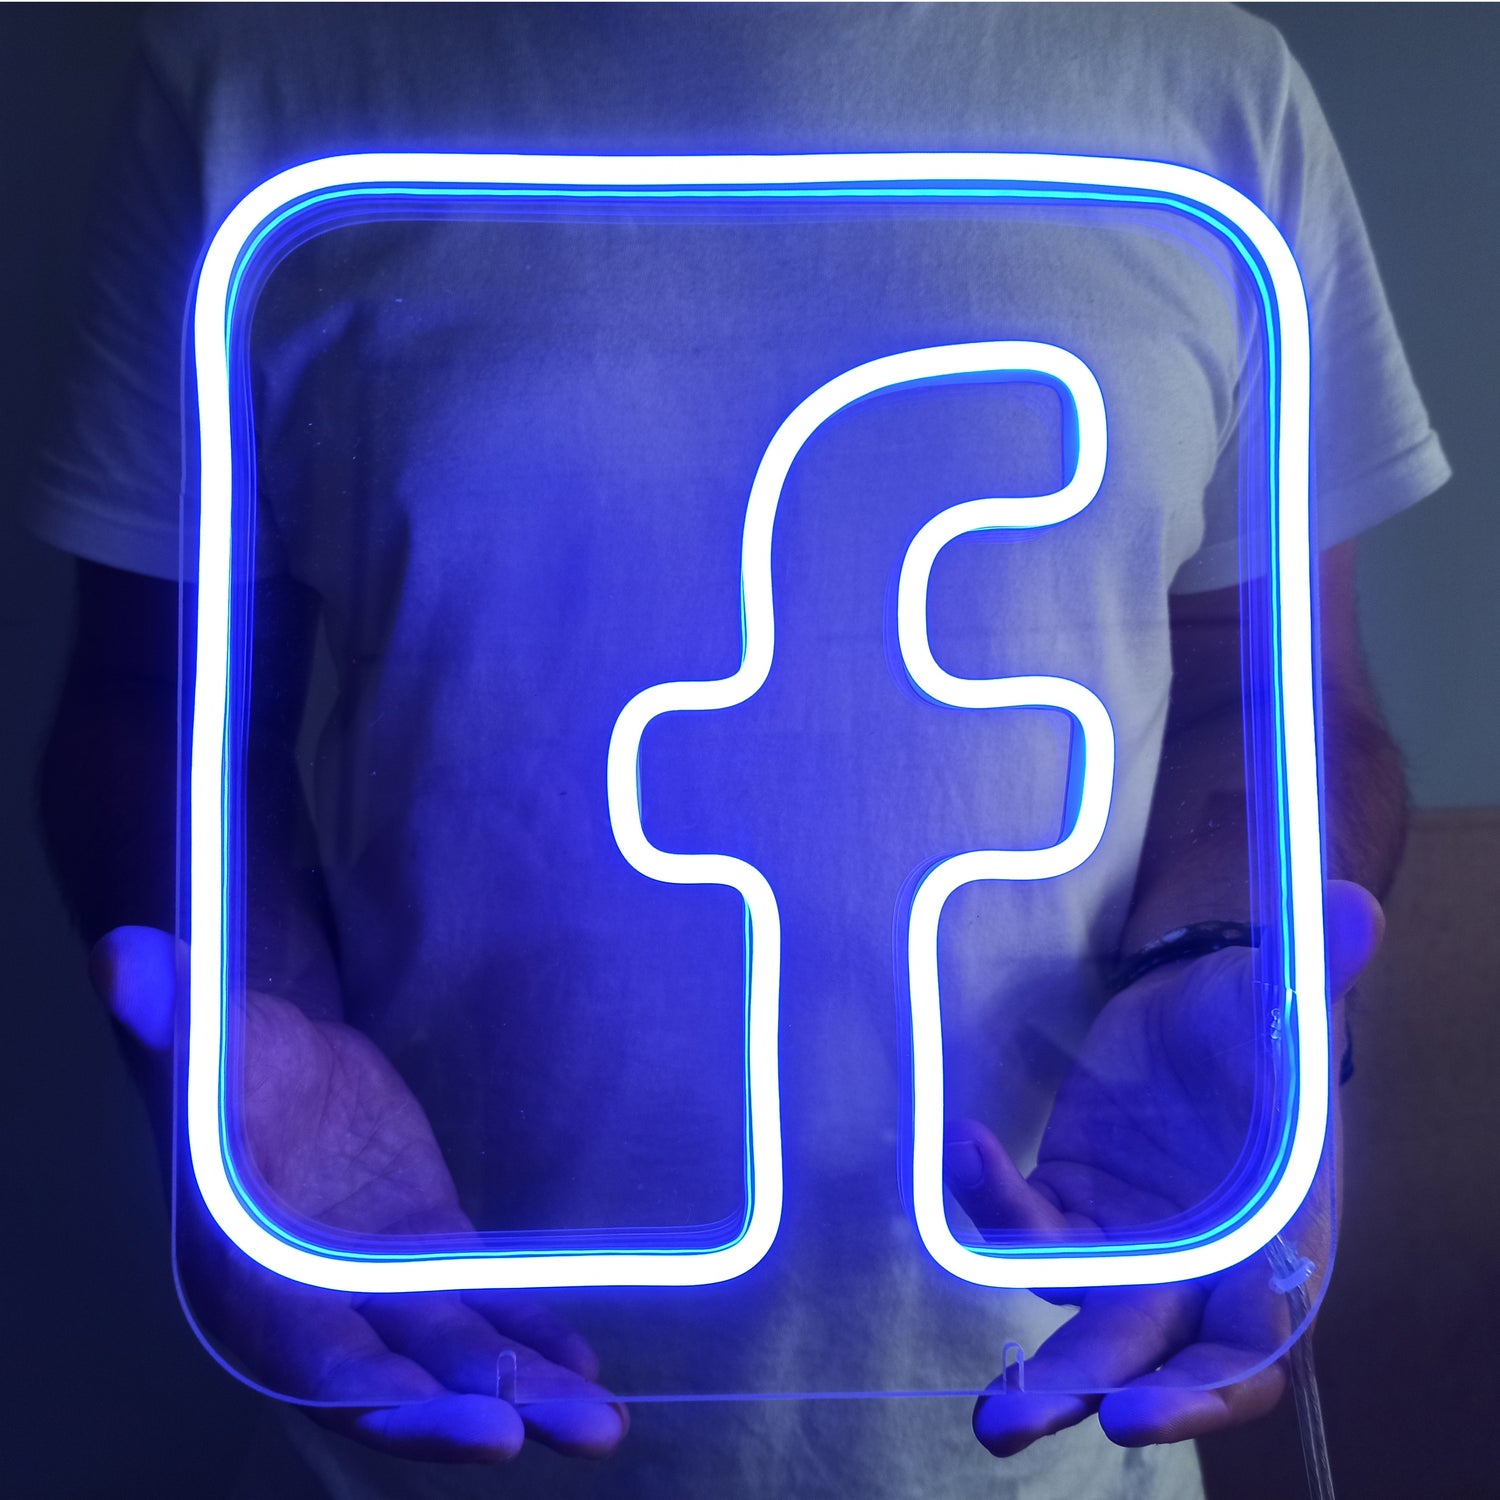 Mini neon Led sign "Facebook"